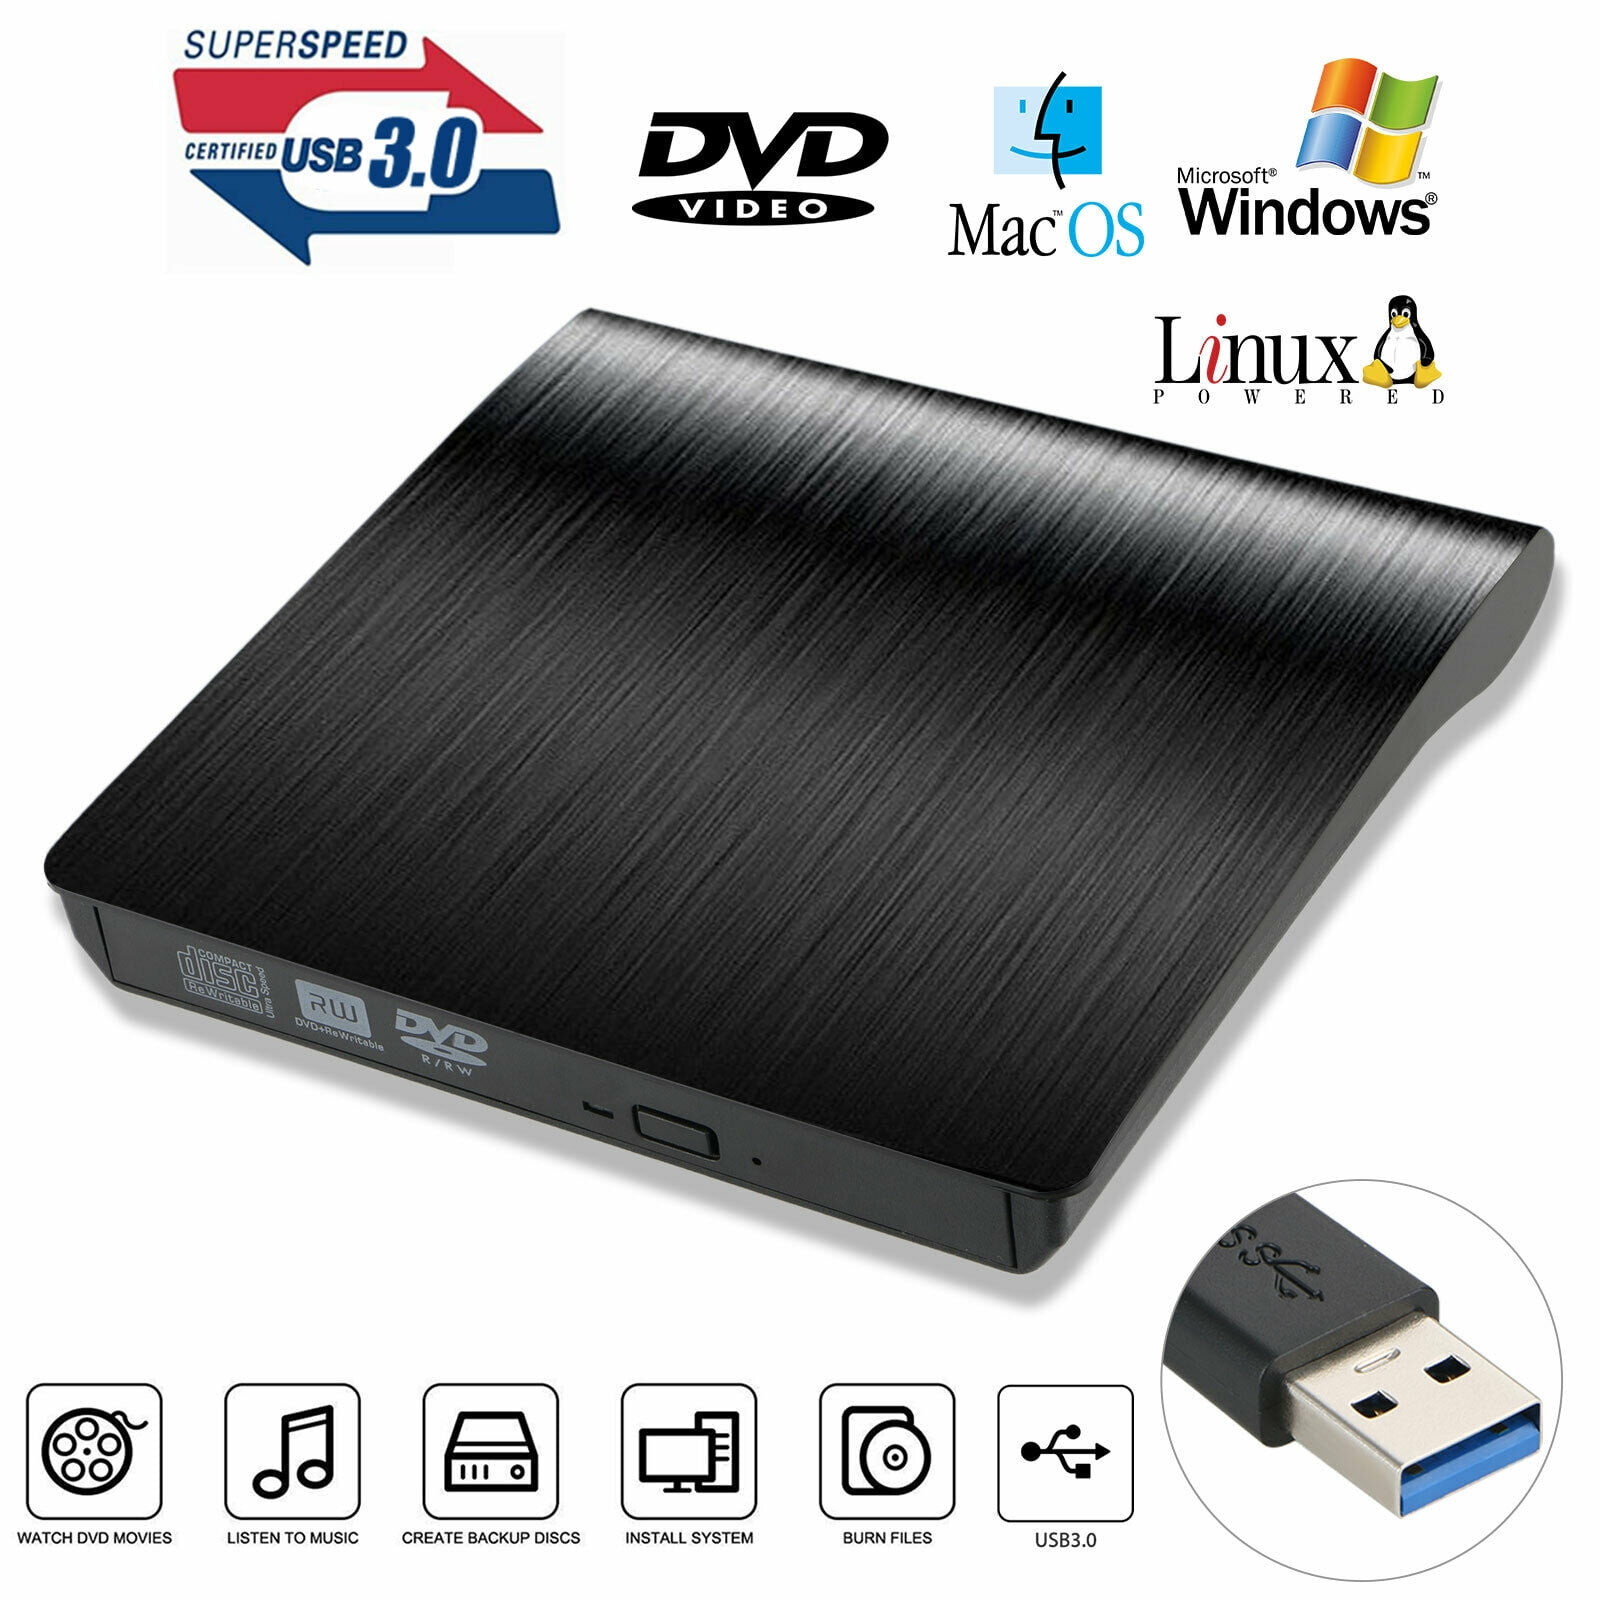 External USB 2.0/3.0 DVD RW CD Writer Slim Drive Burner Reader Player for PC Laptop